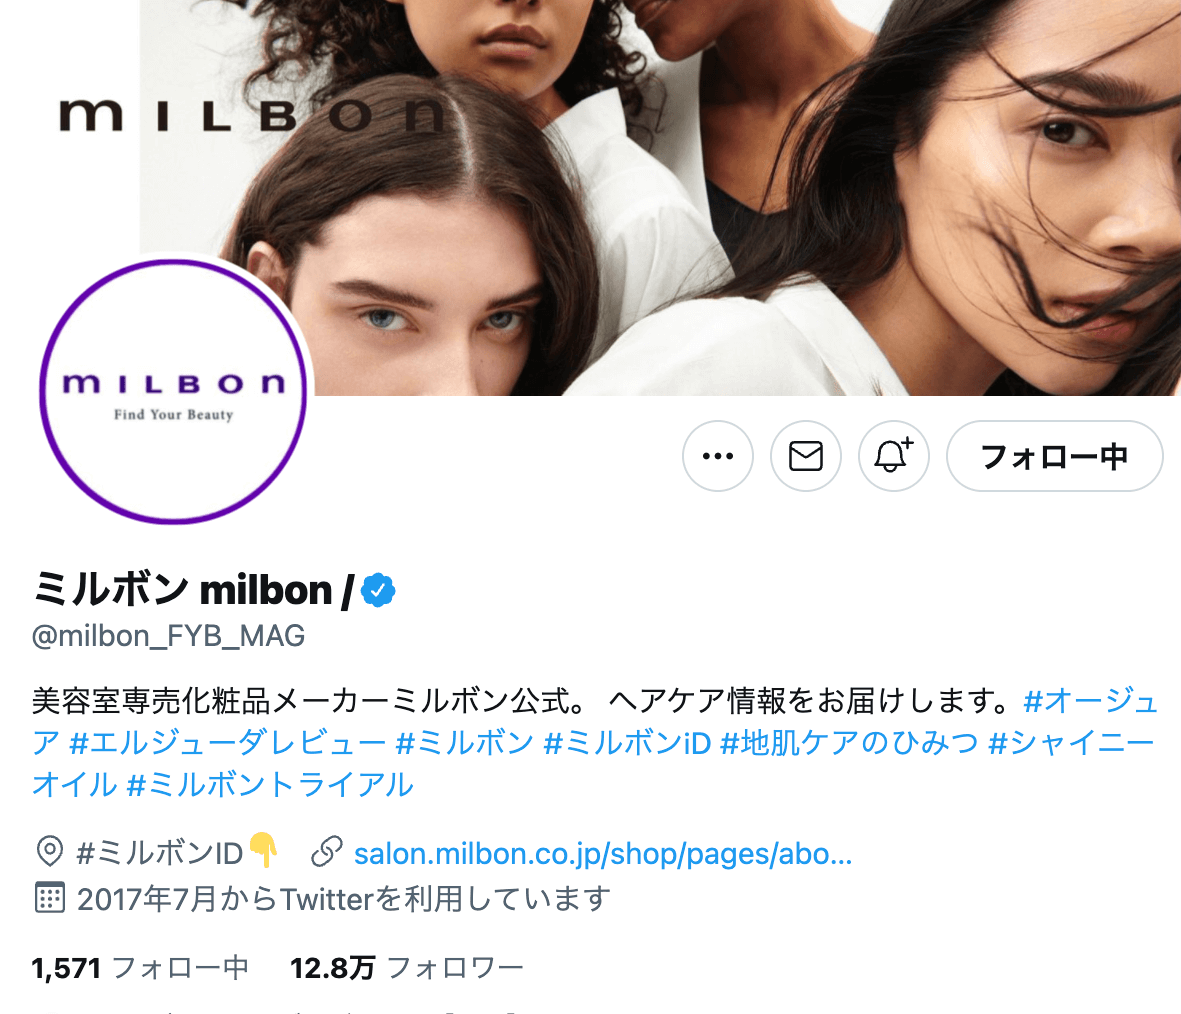 twitter-official-account-milbon_fyb_mag